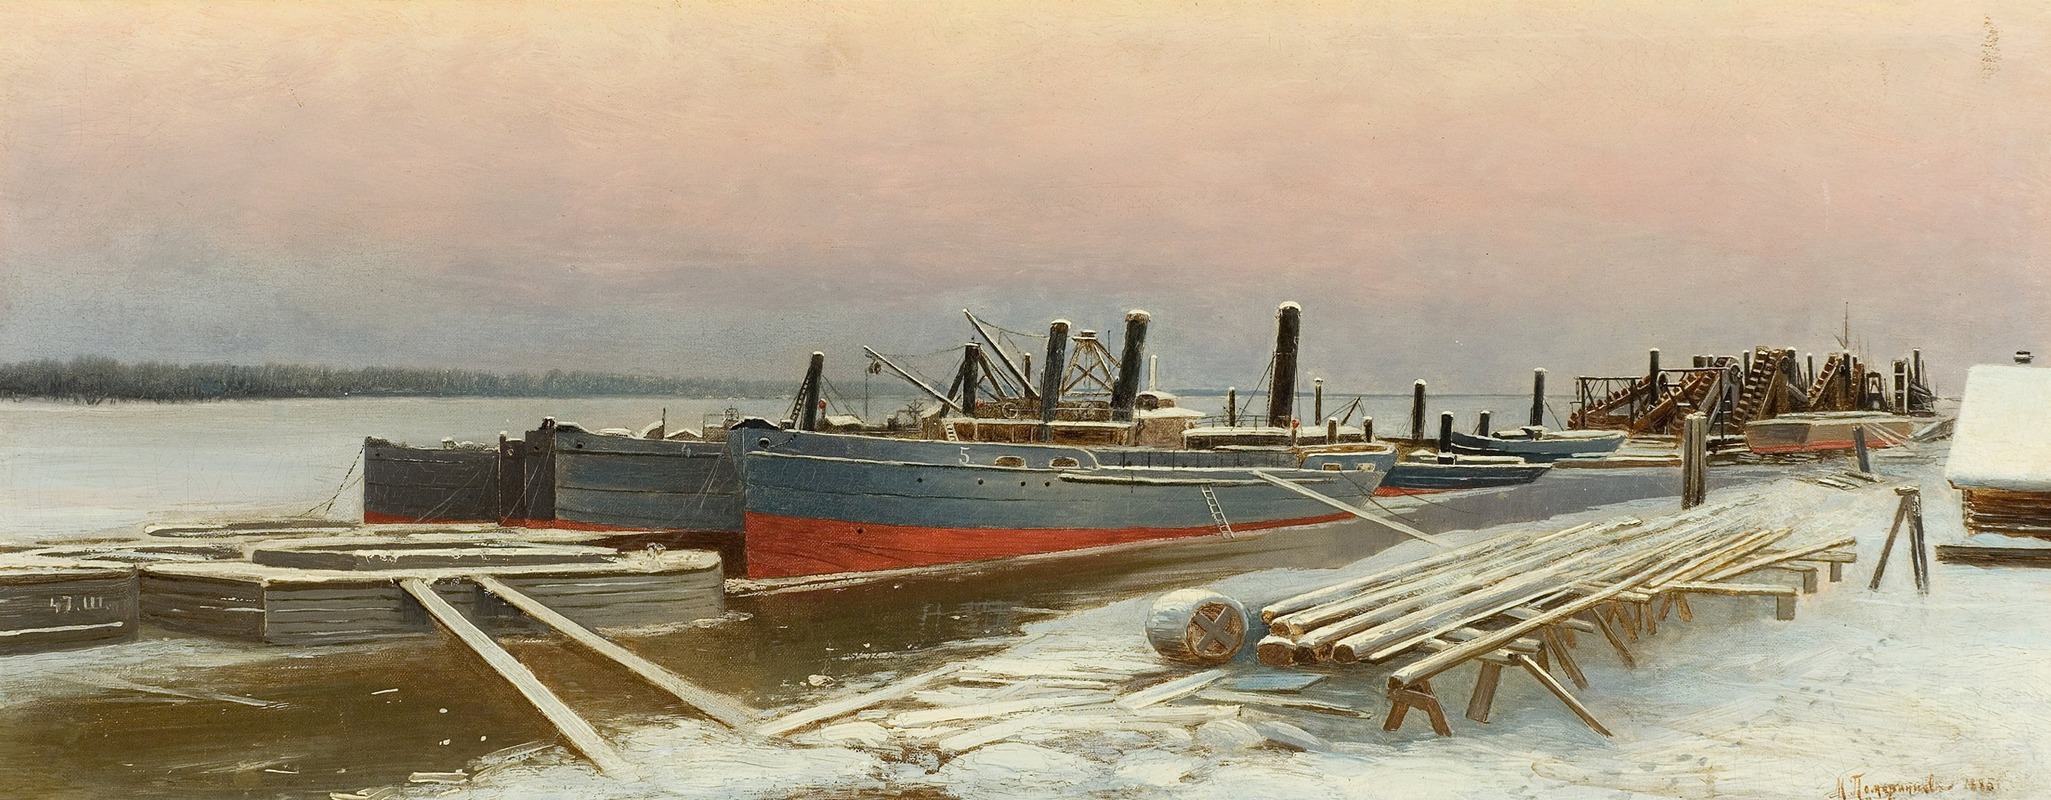 Mikhail Pomeranzev - Boats at Dock in Winter